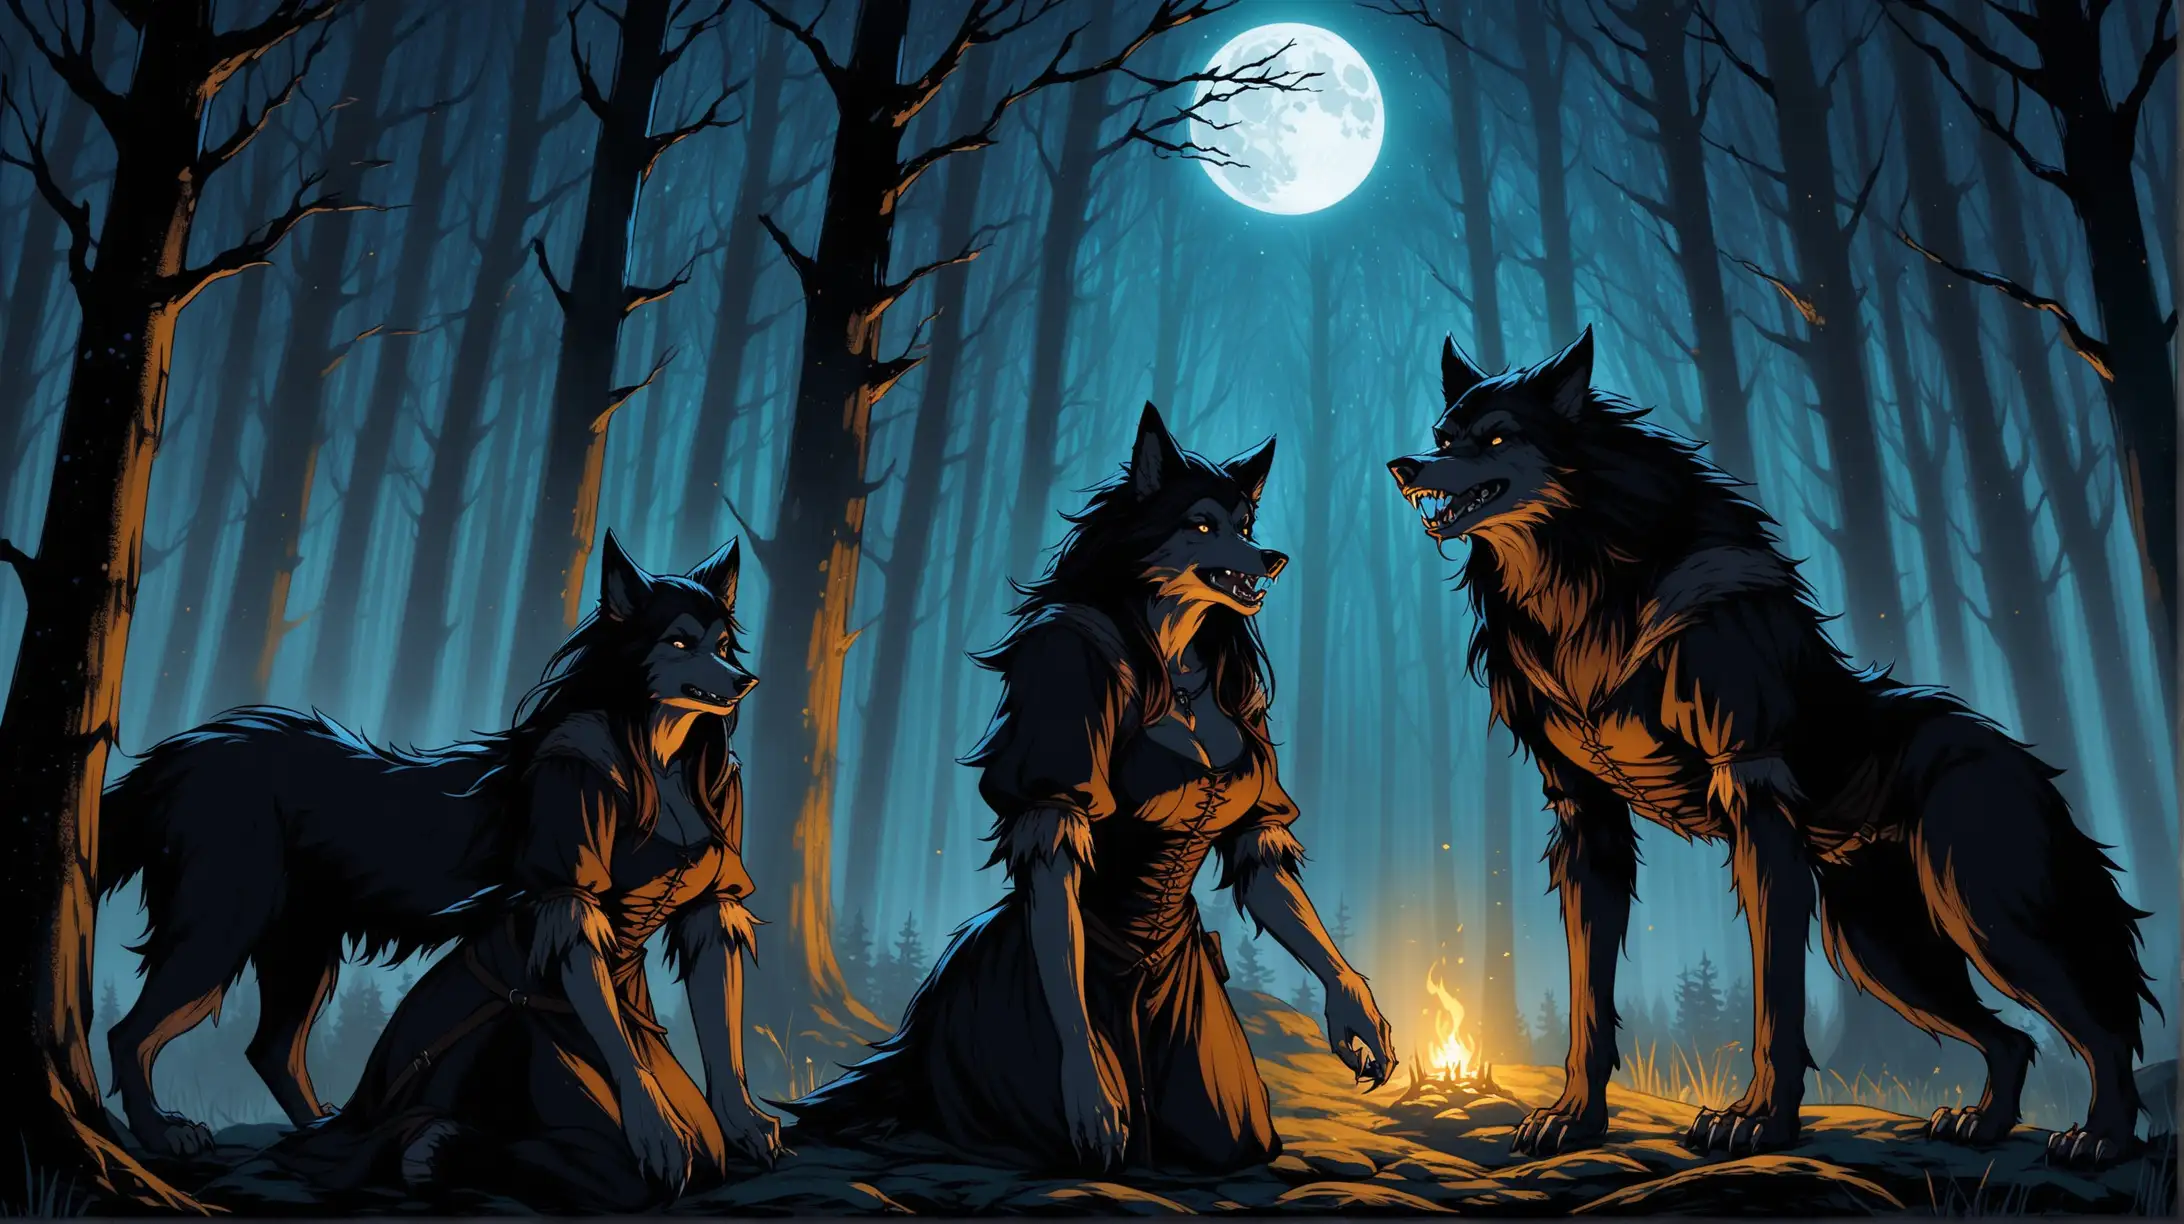 European Medieval Fantasy Female Werewolves Roaming the Night Forest